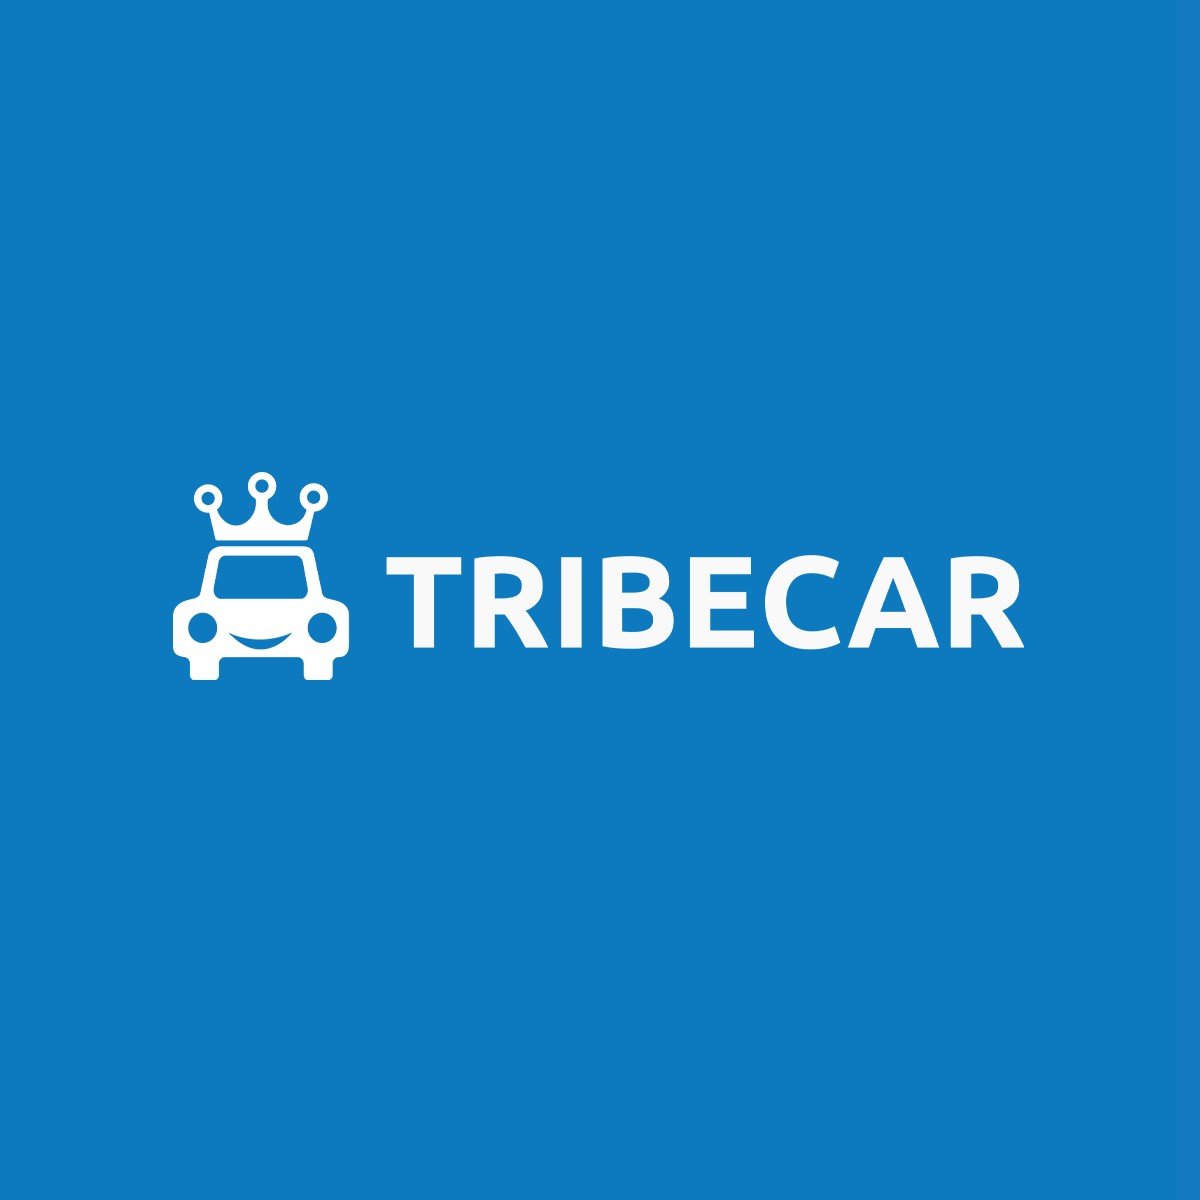 tribecar car sharing